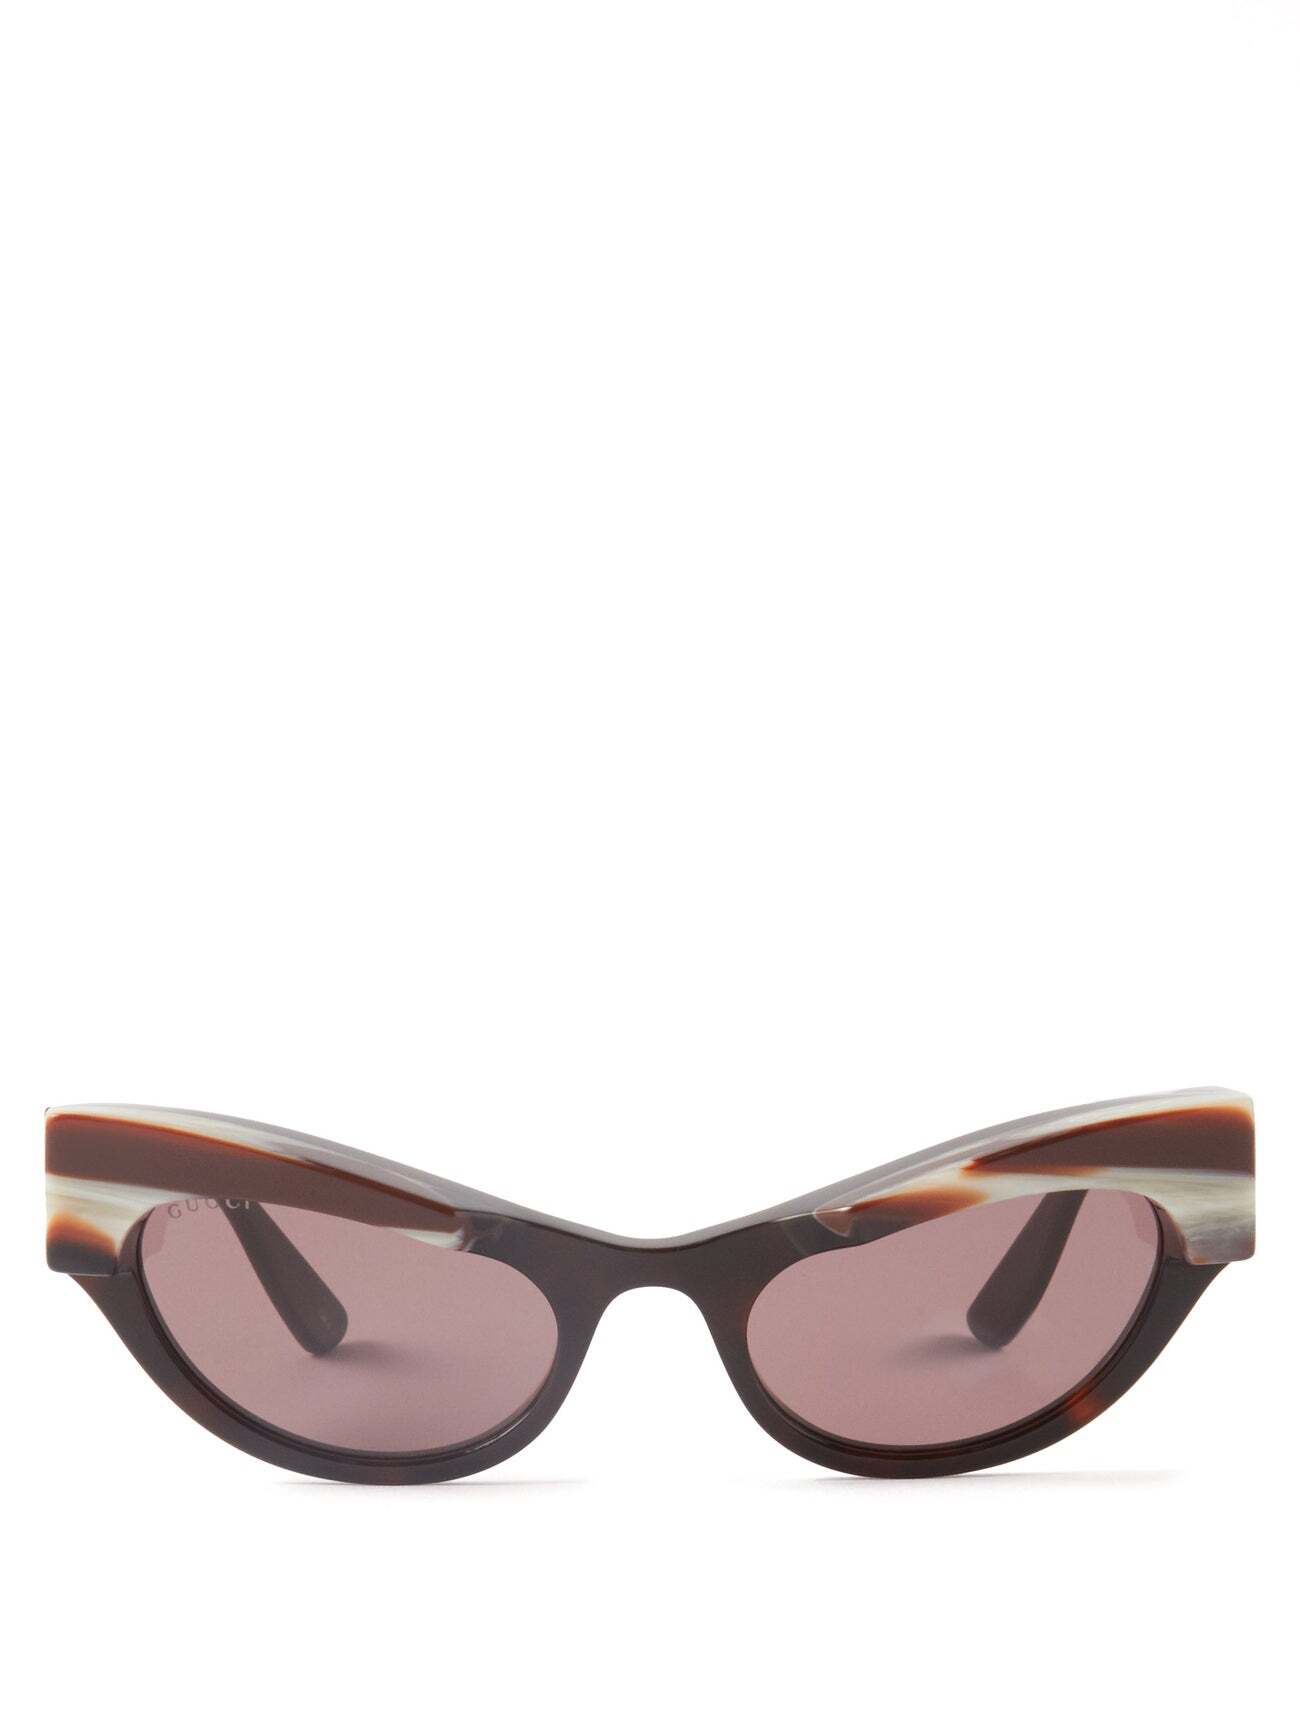 Gucci - Horn-effect Rim Cat-eye Acetate Sunglasses - Womens - Brown Multi